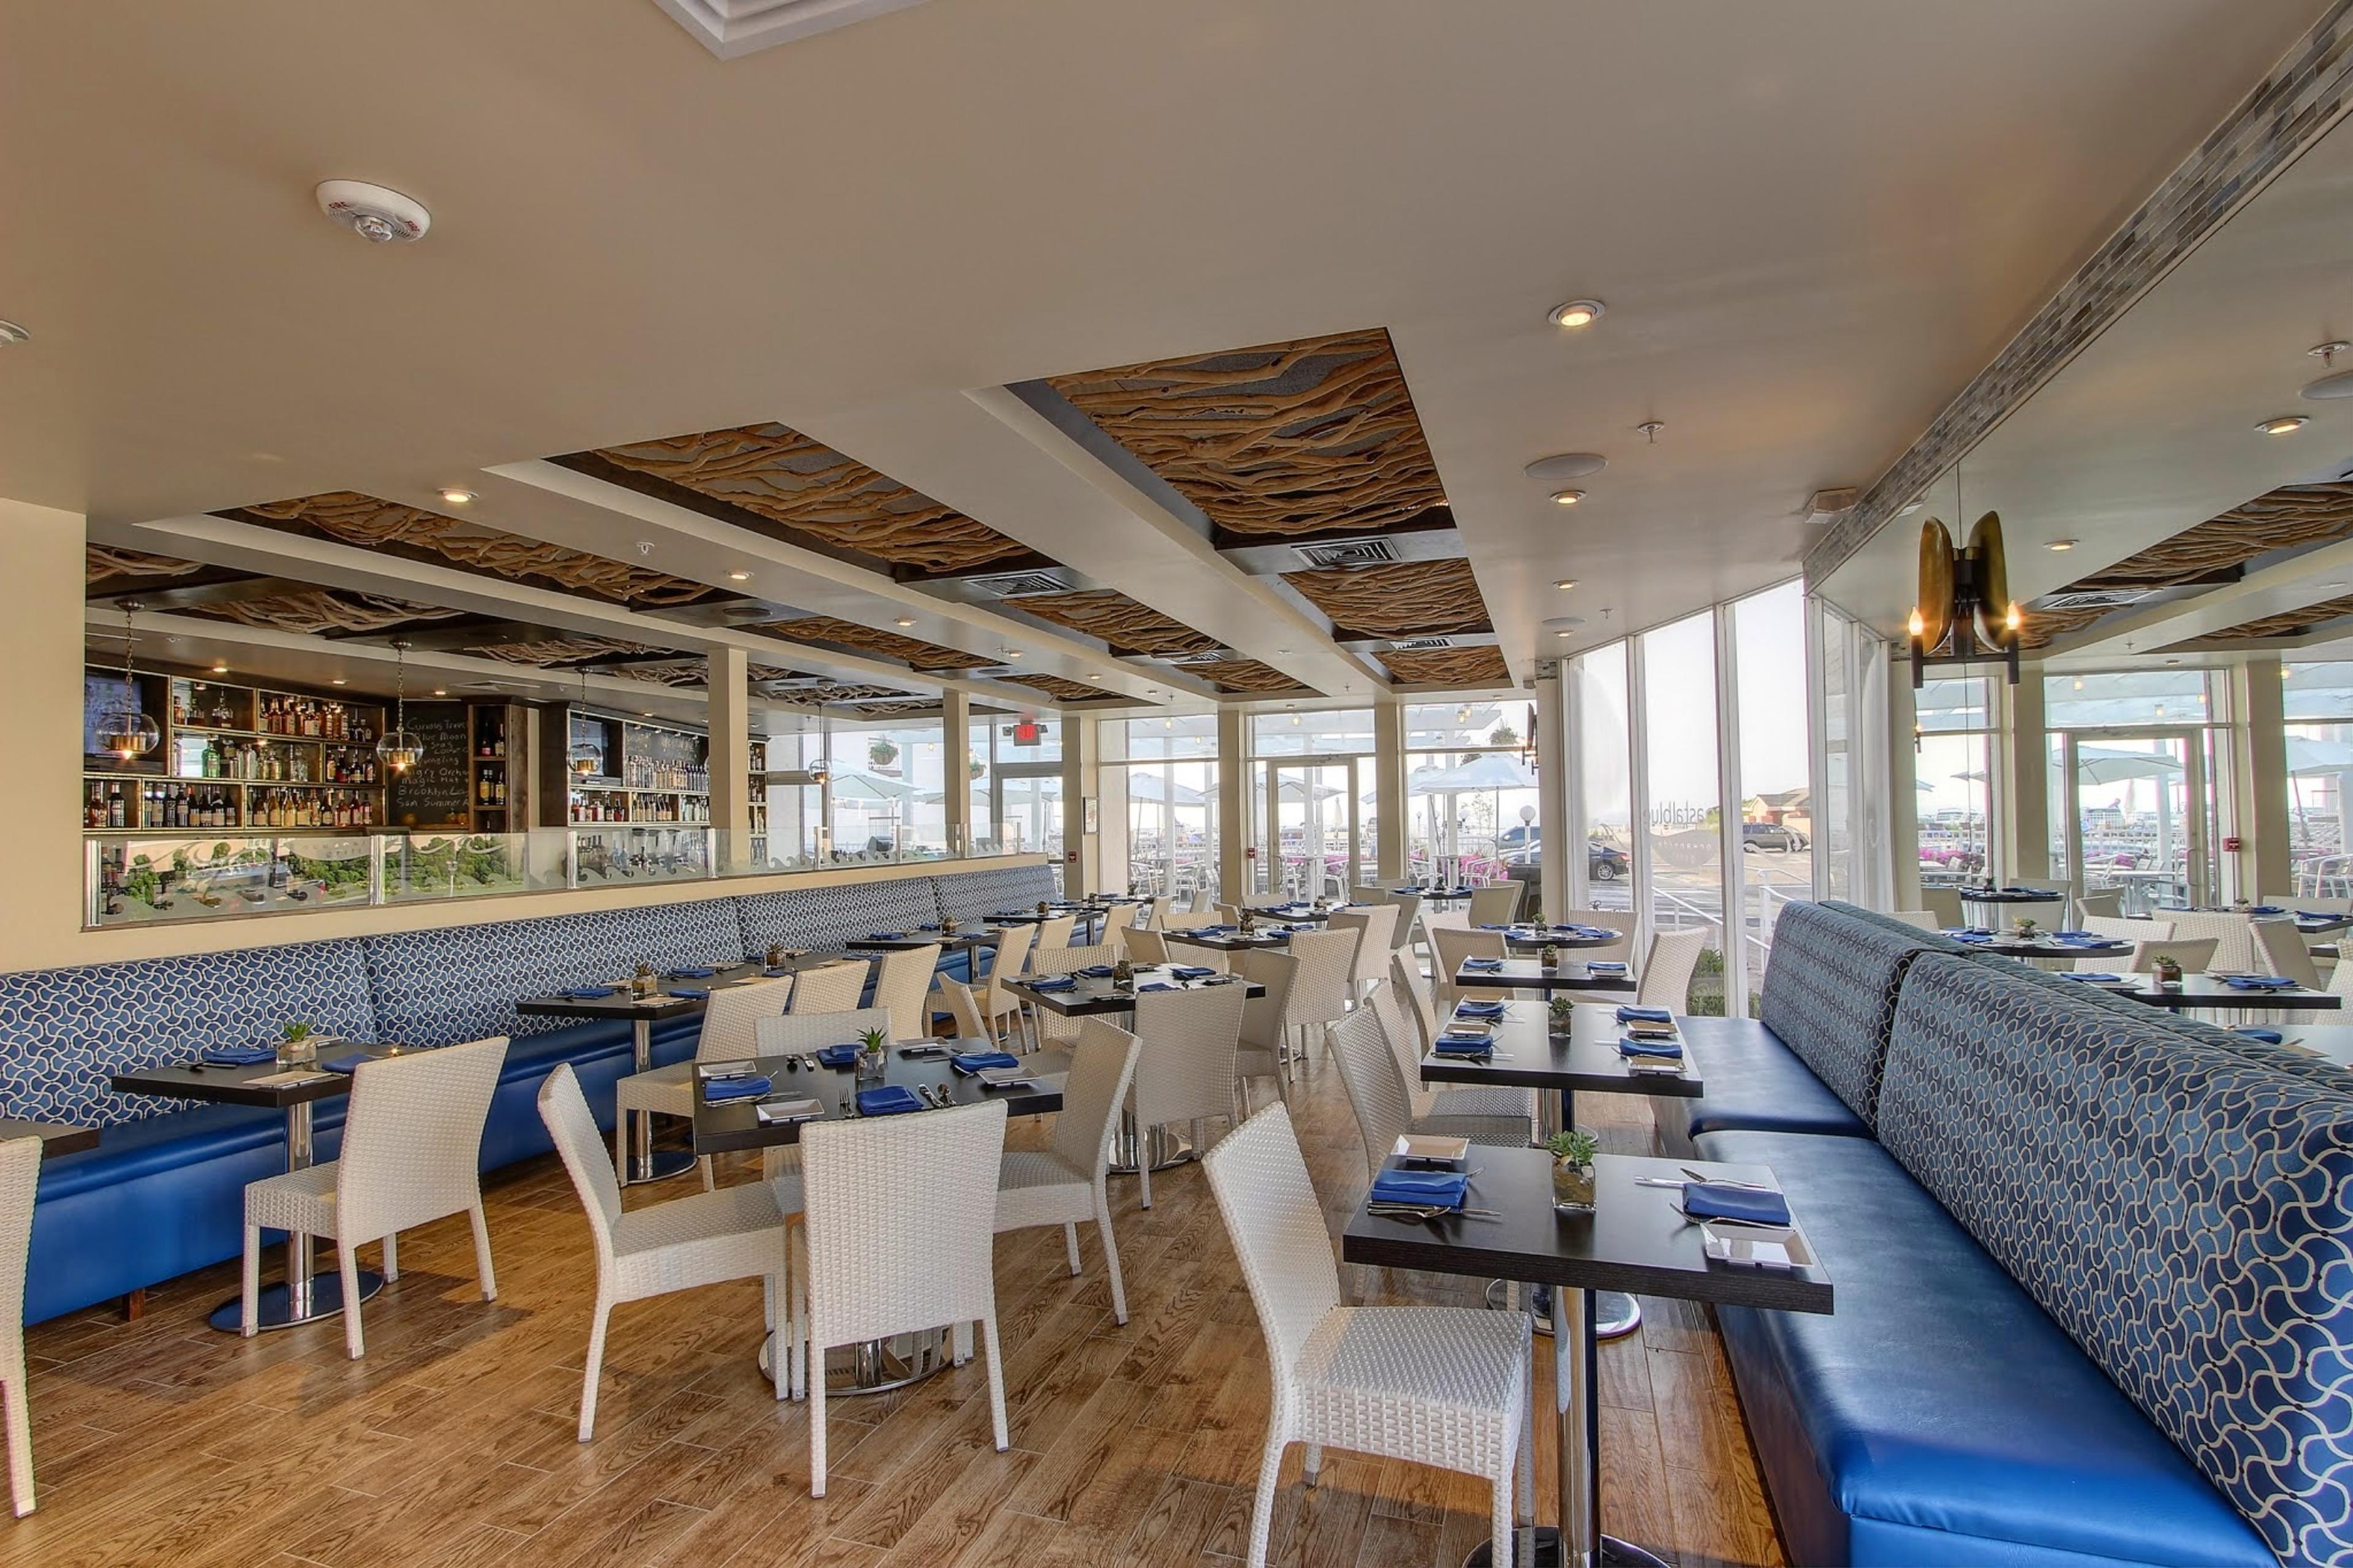 Coastal Blue Oceanside Bar & Grill